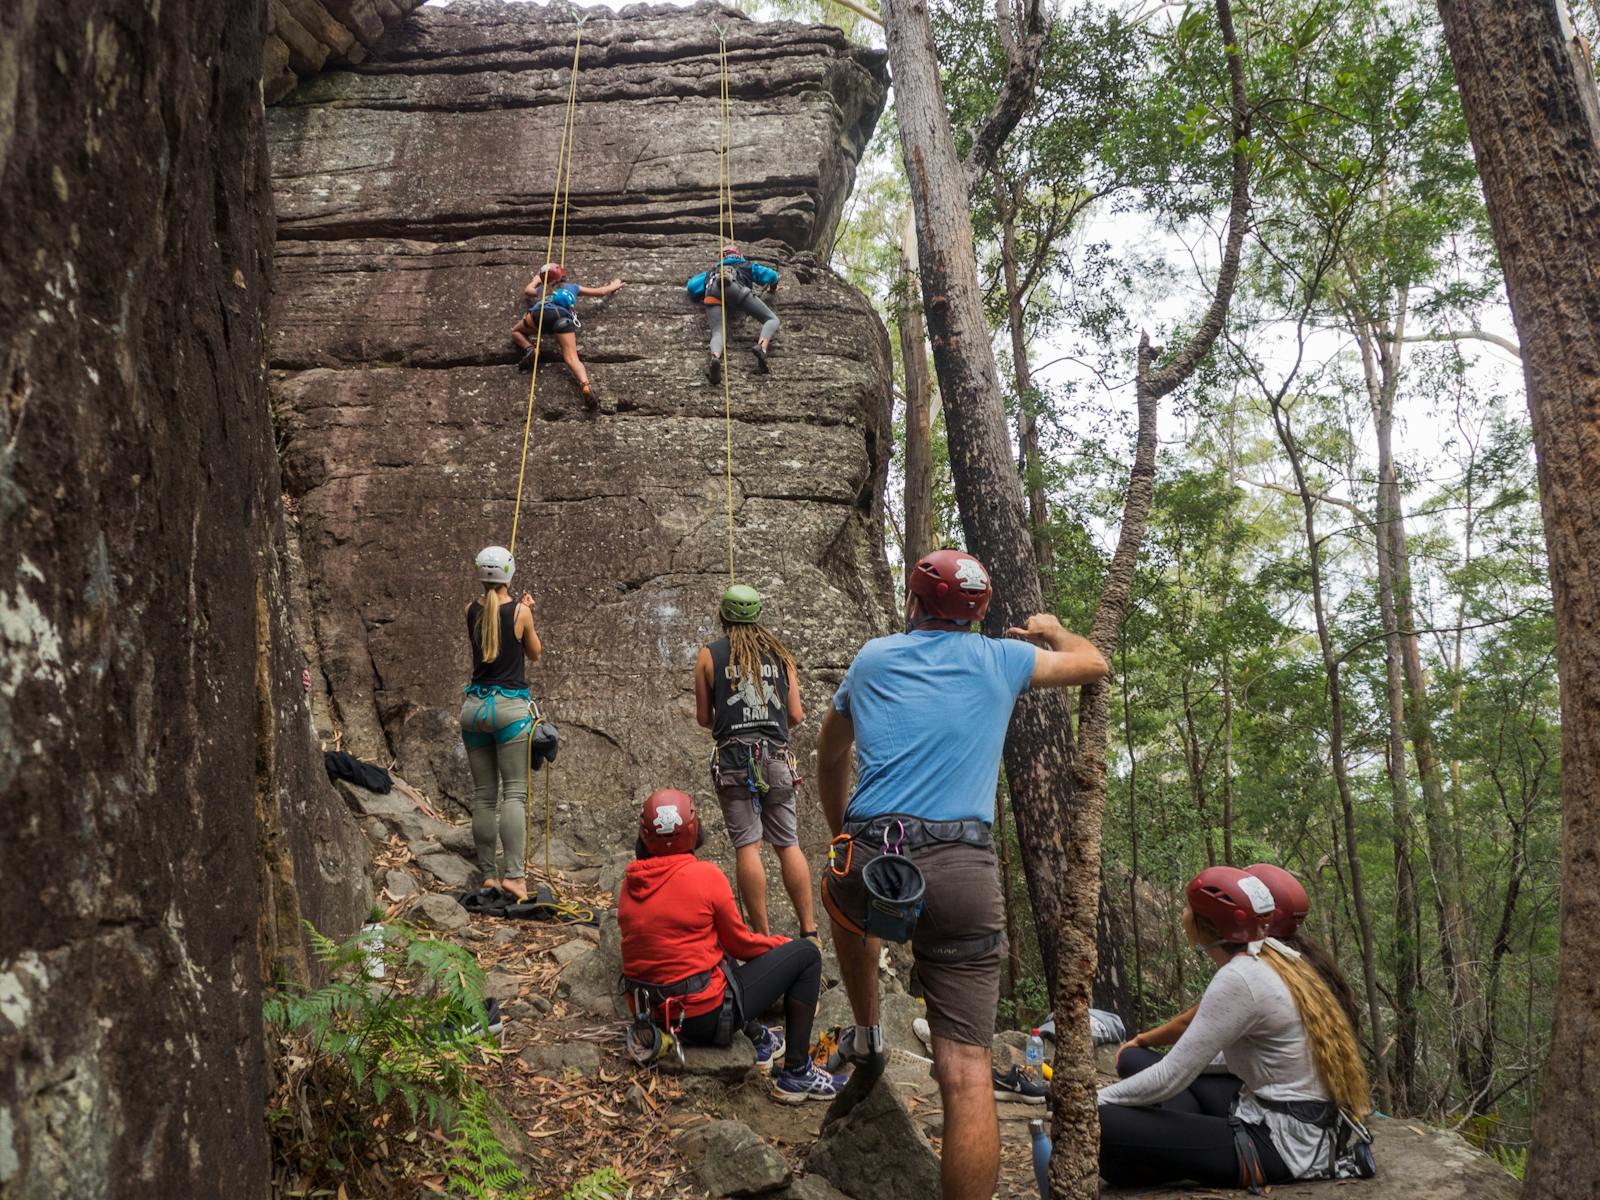 Family fun Rock climbing abseiling adventure